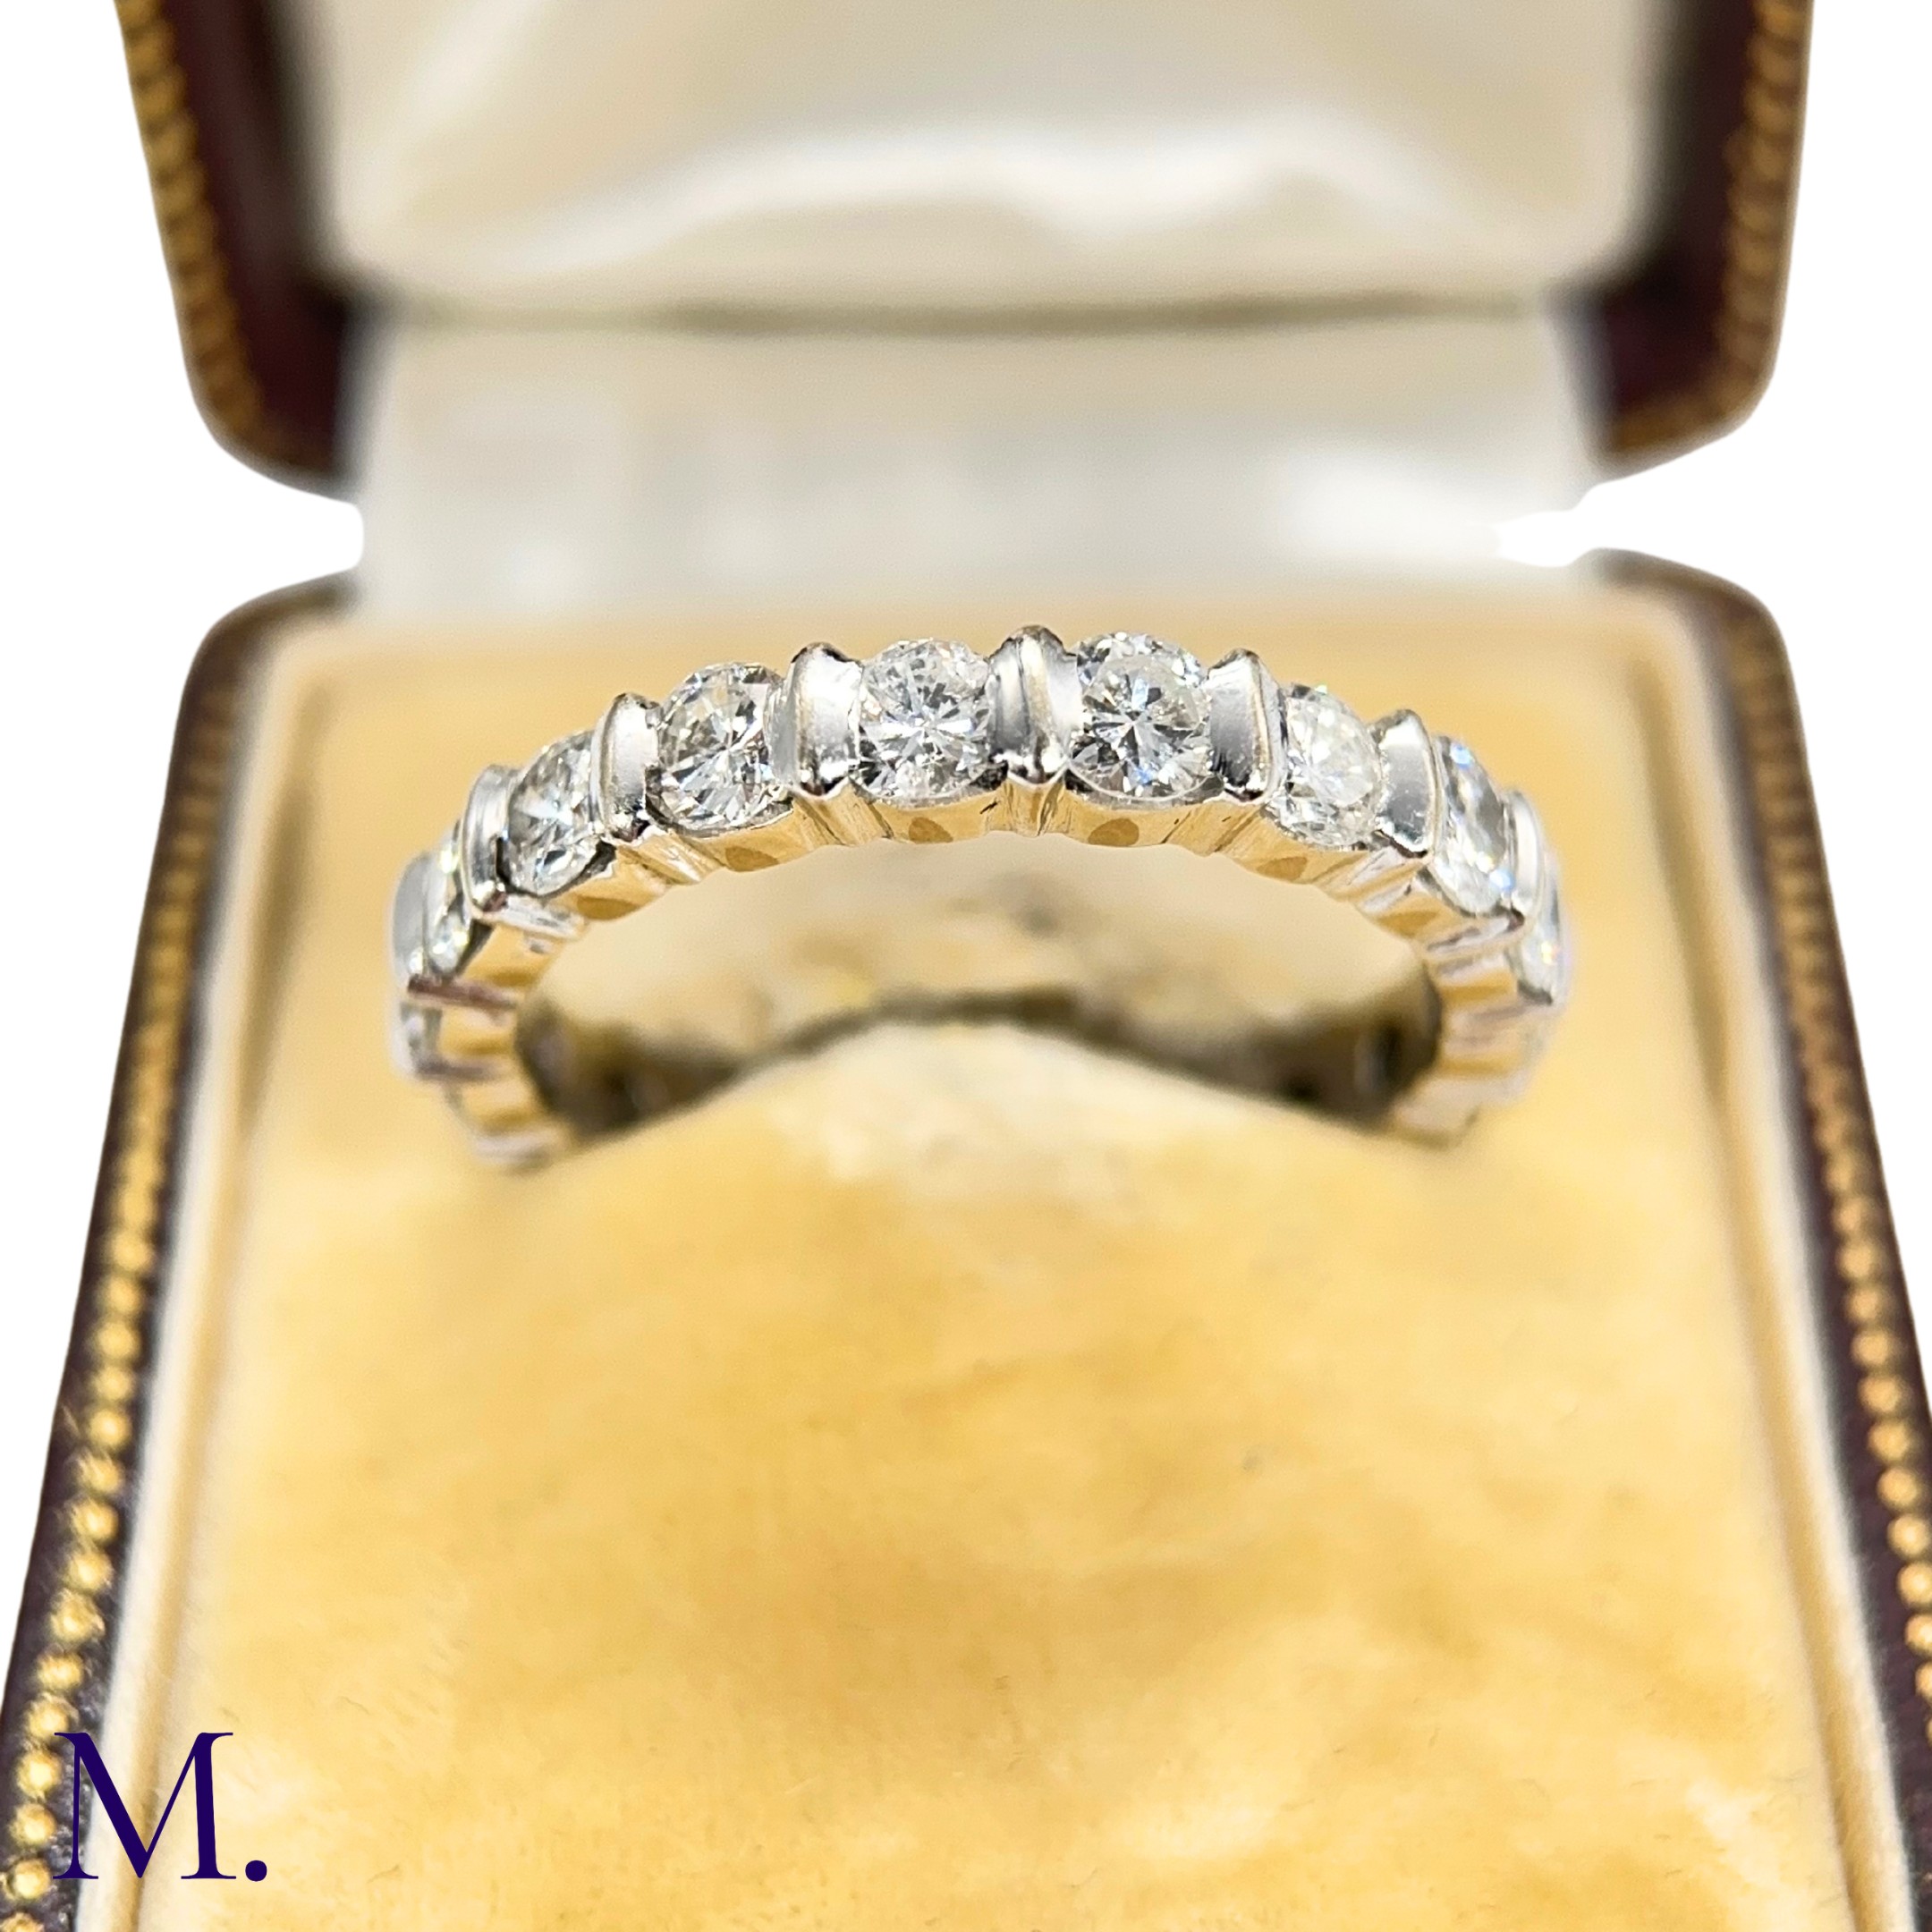 A Diamond Band Ring - Image 2 of 4